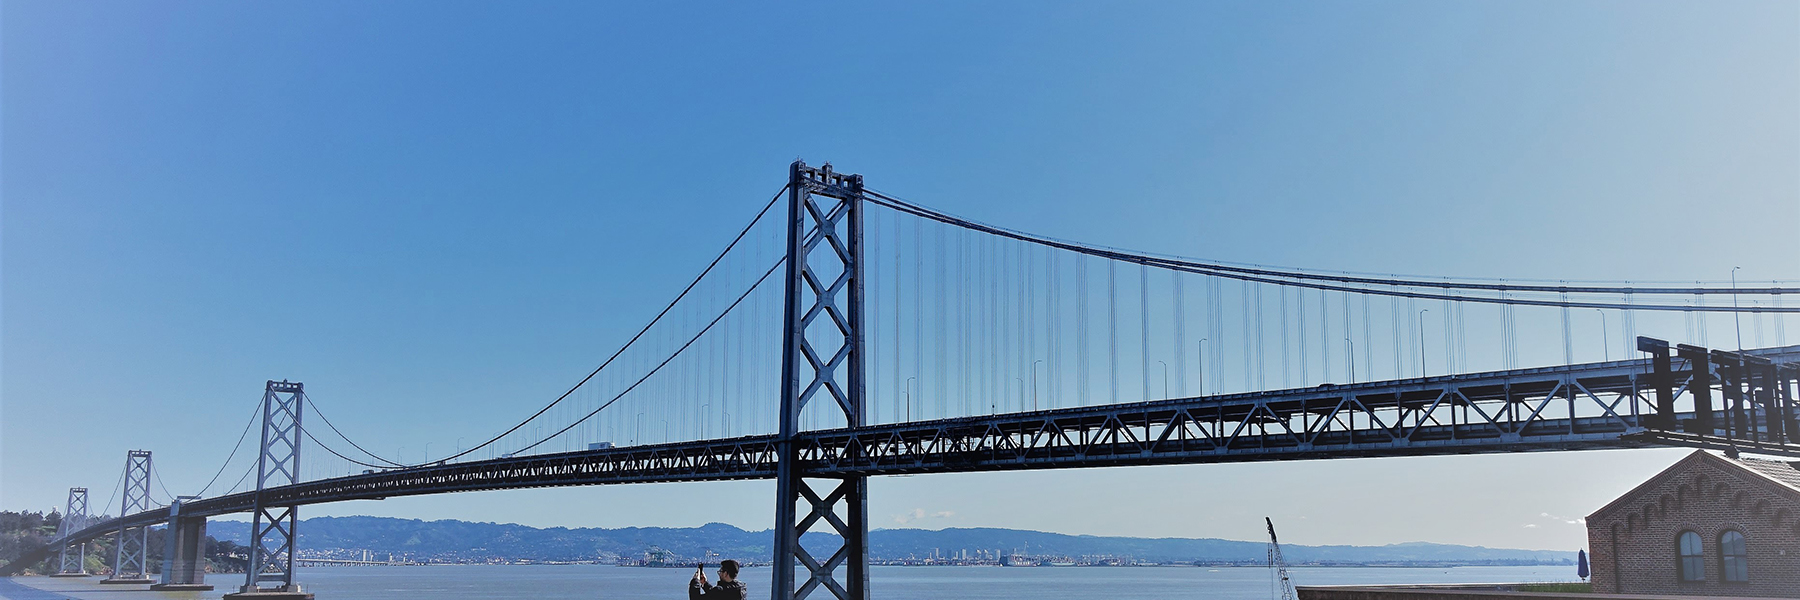 San-Francisco Golden Gate Bridge Featured image for YFile